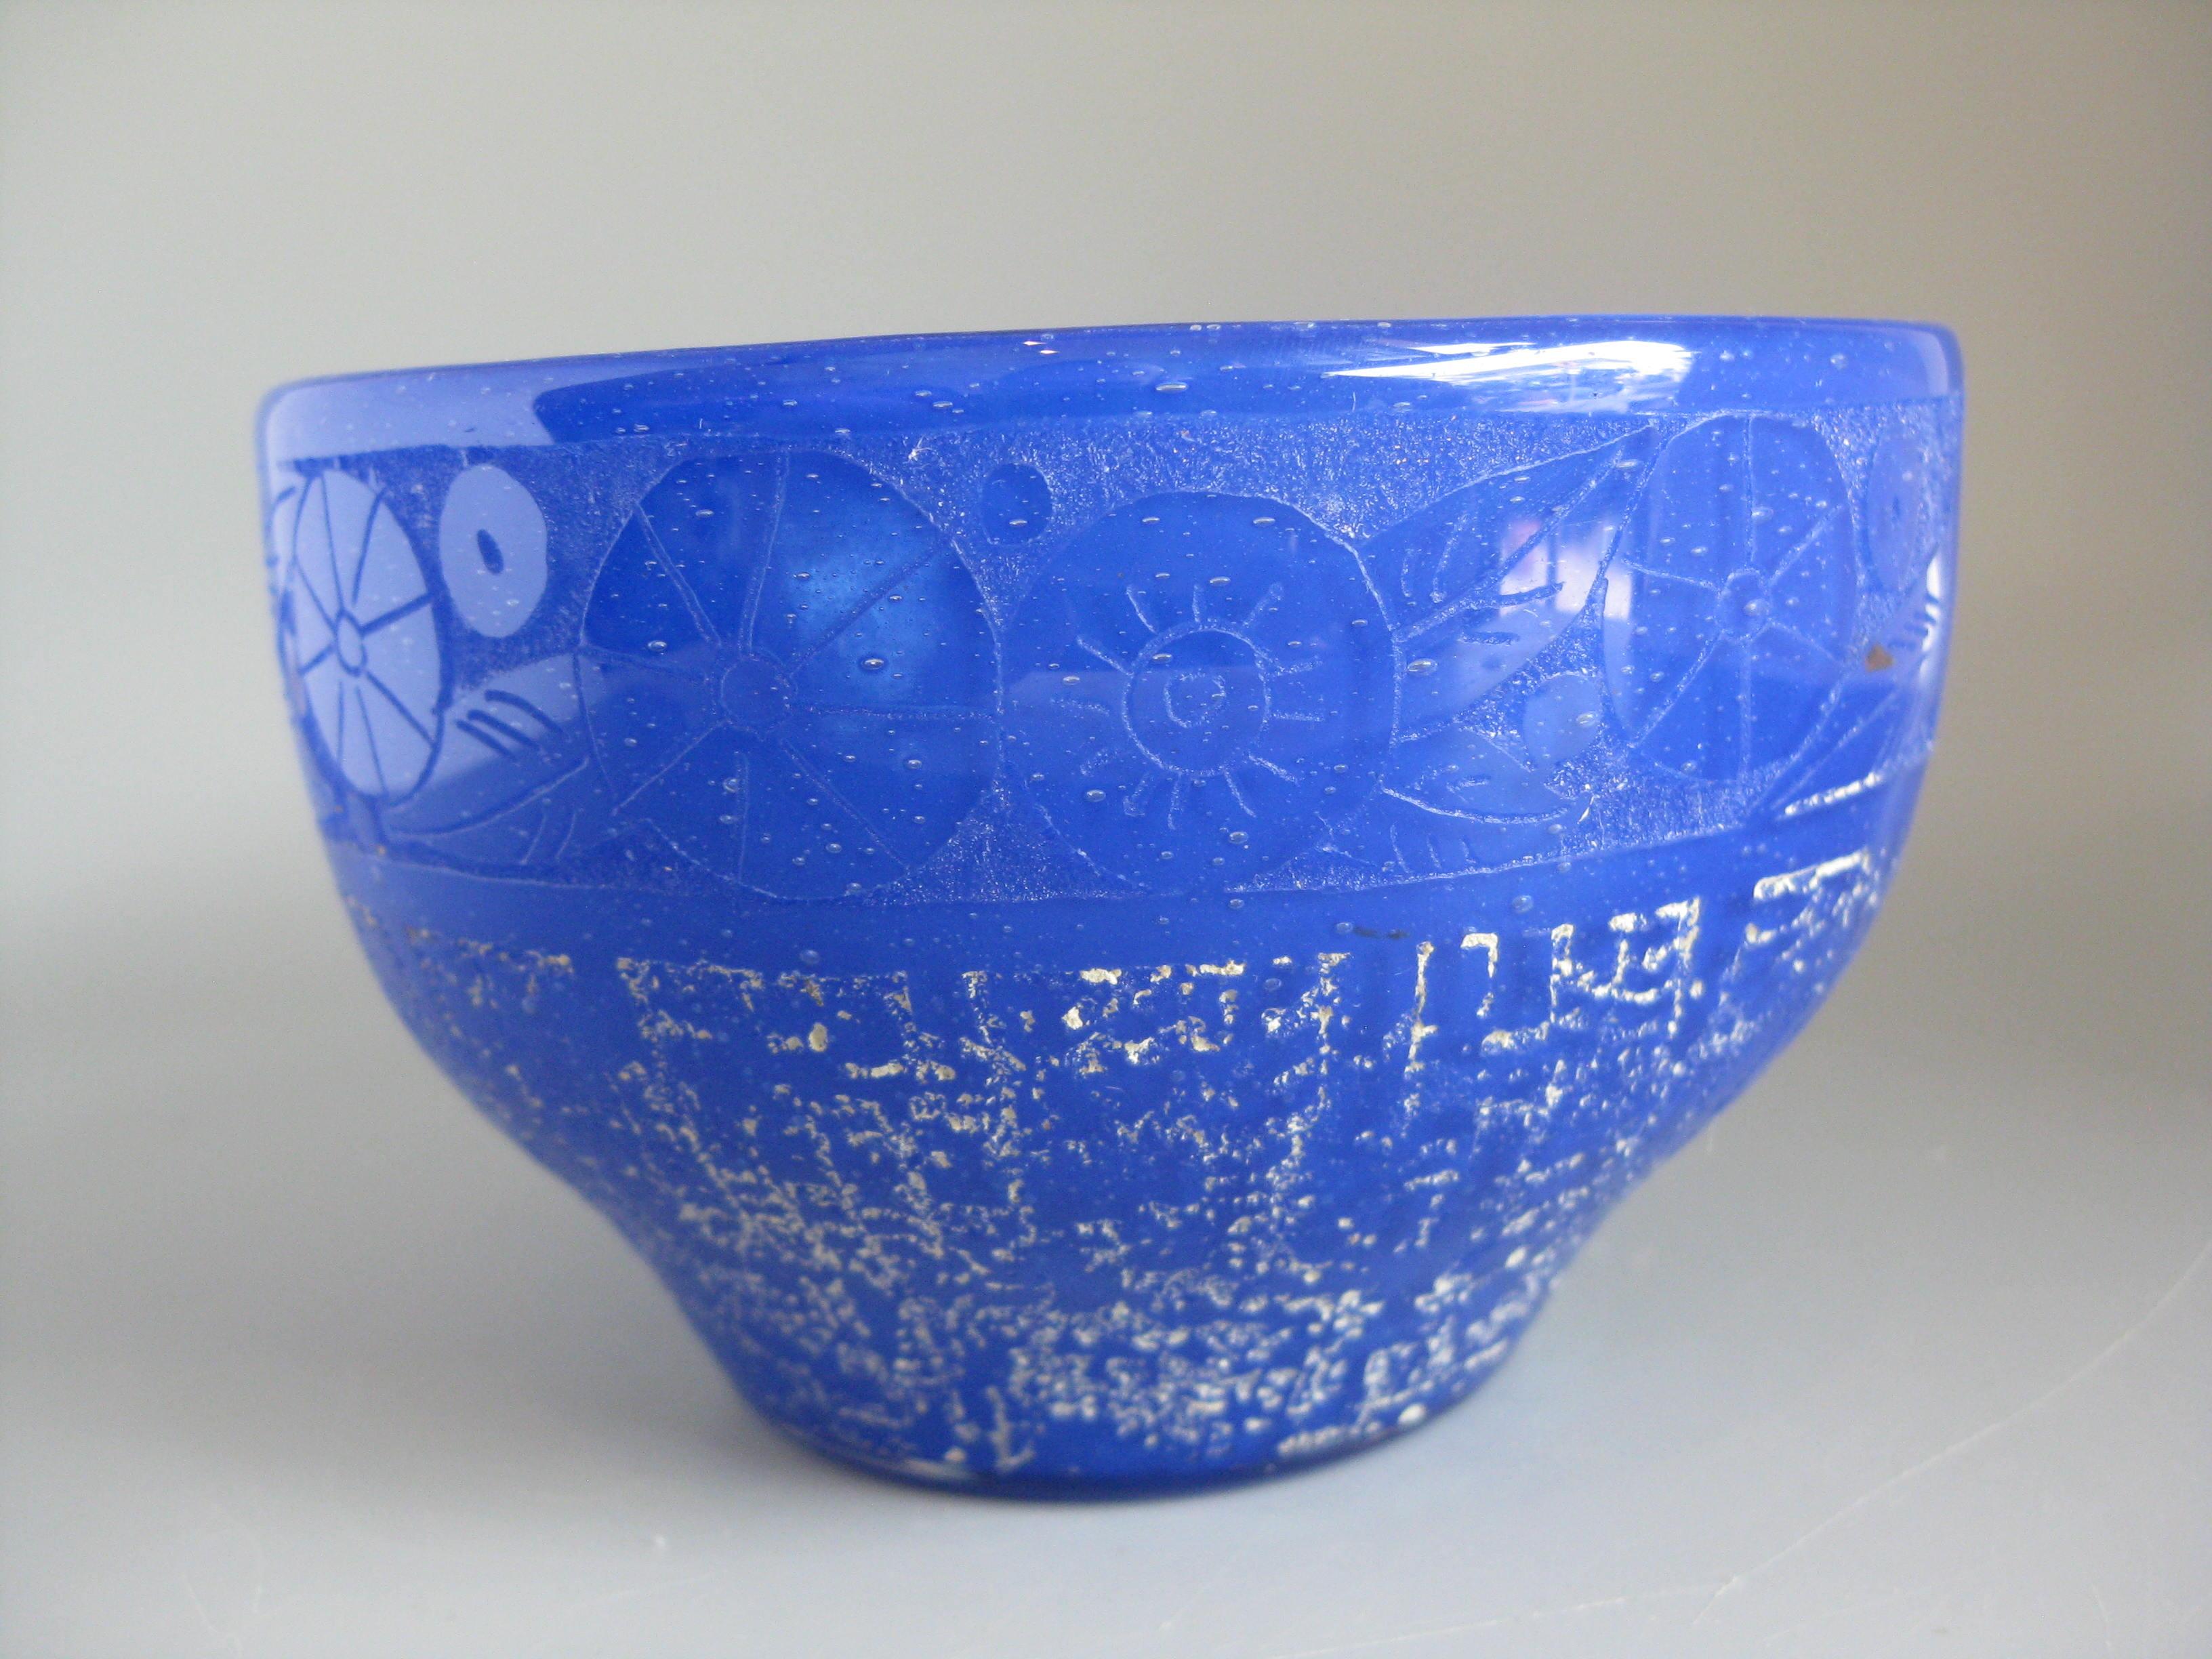 20th Century French Art Deco 1920's Daum Nancy France Art Glass Acid Etched Blue Vase Bowl For Sale